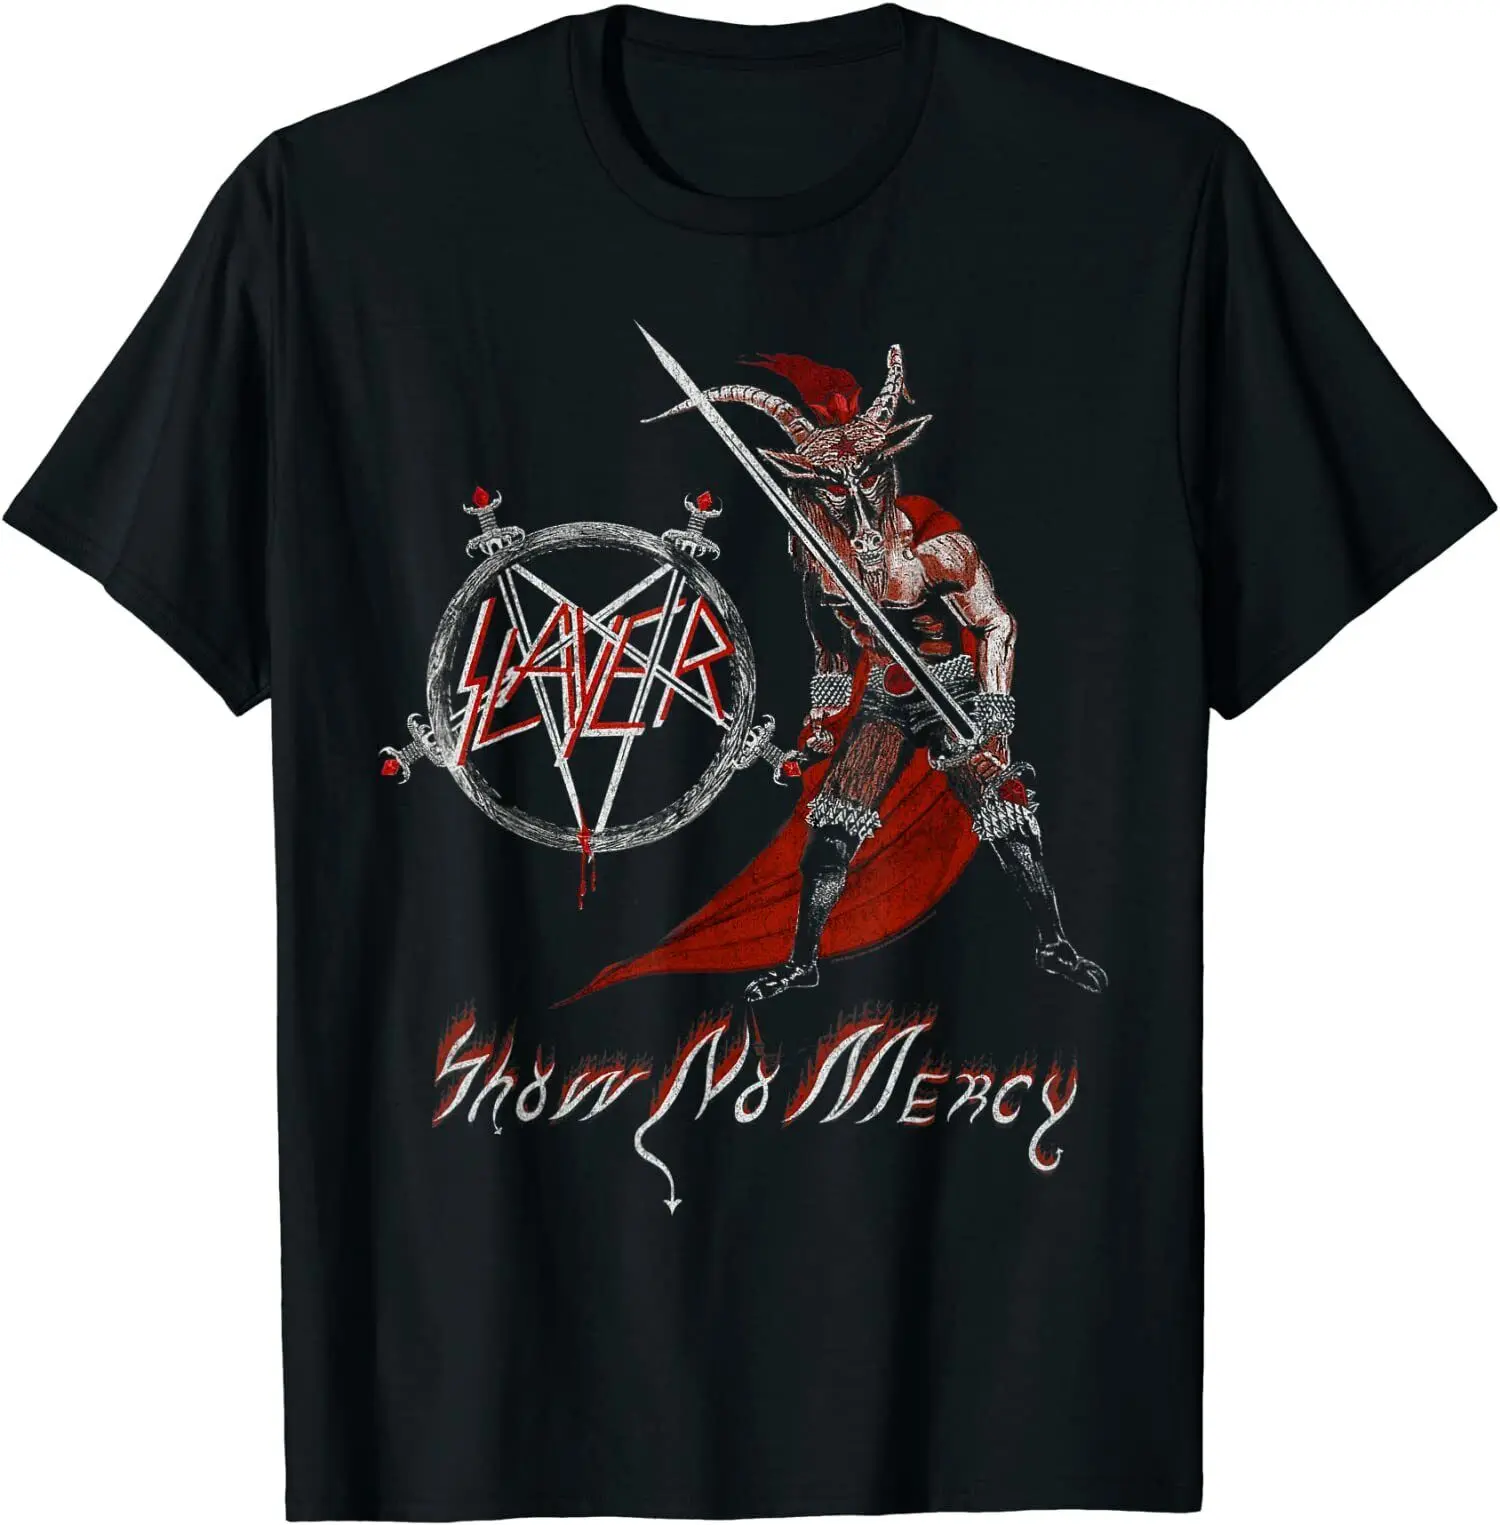 

Vintage Slayer Show No Mercy O-Neck Cotton T Shirt Men Casual Short Sleeve Tees TopsUnsiex Couple